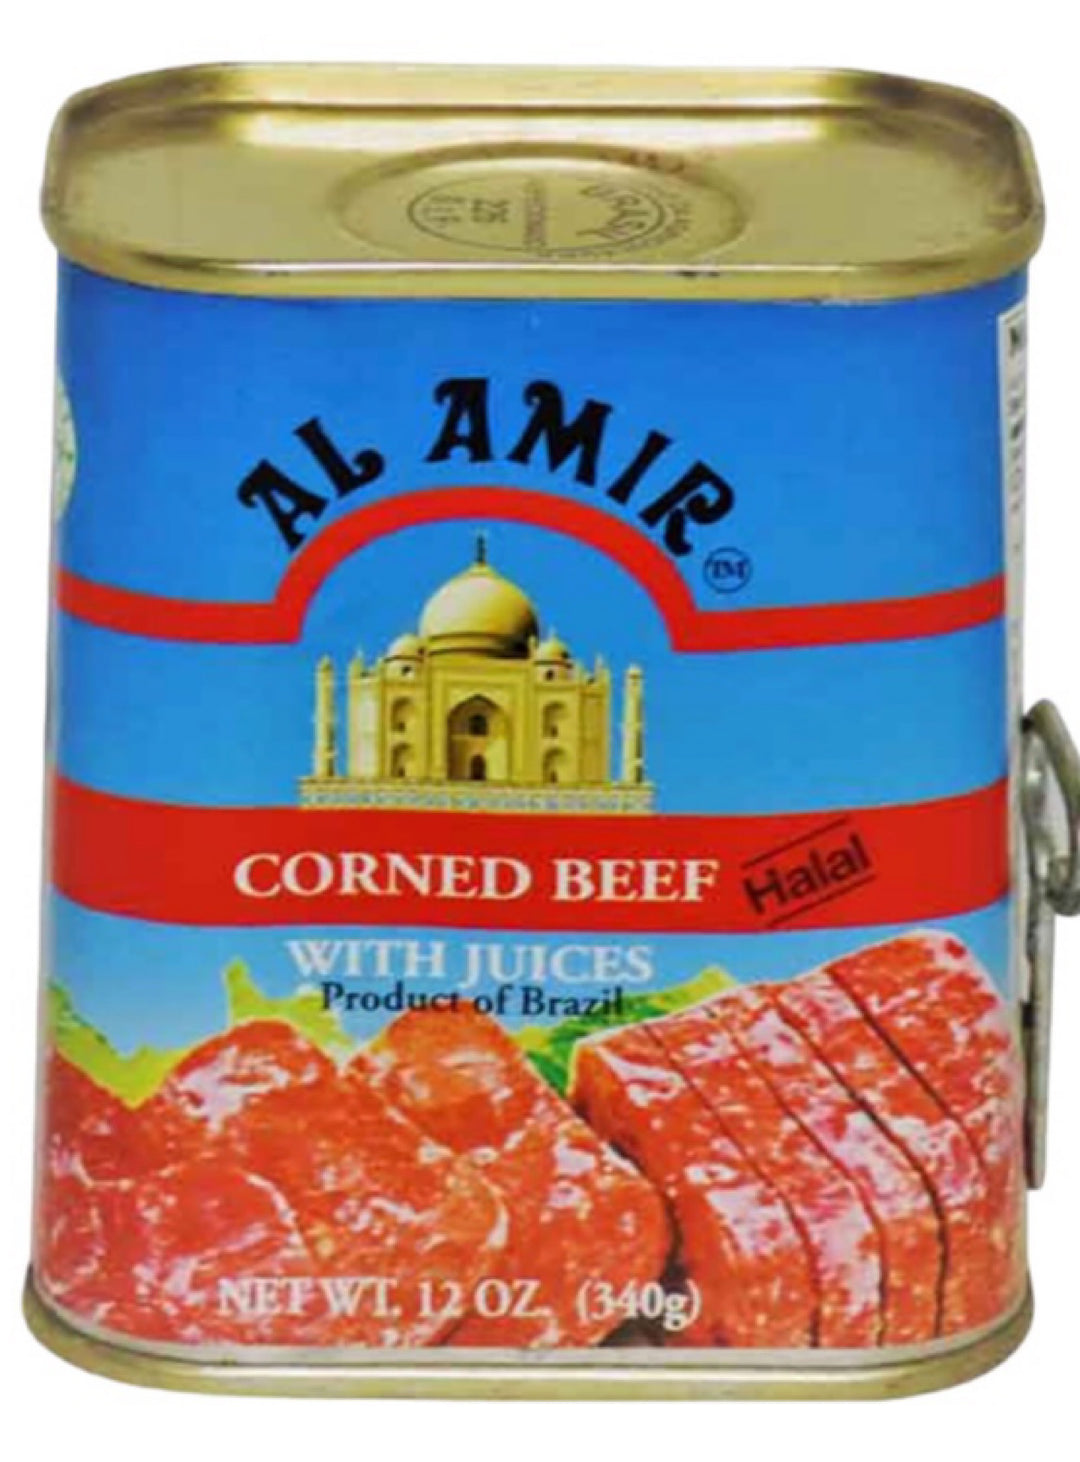 Corn Beef Halal - Al Amir - 12 oz 340g